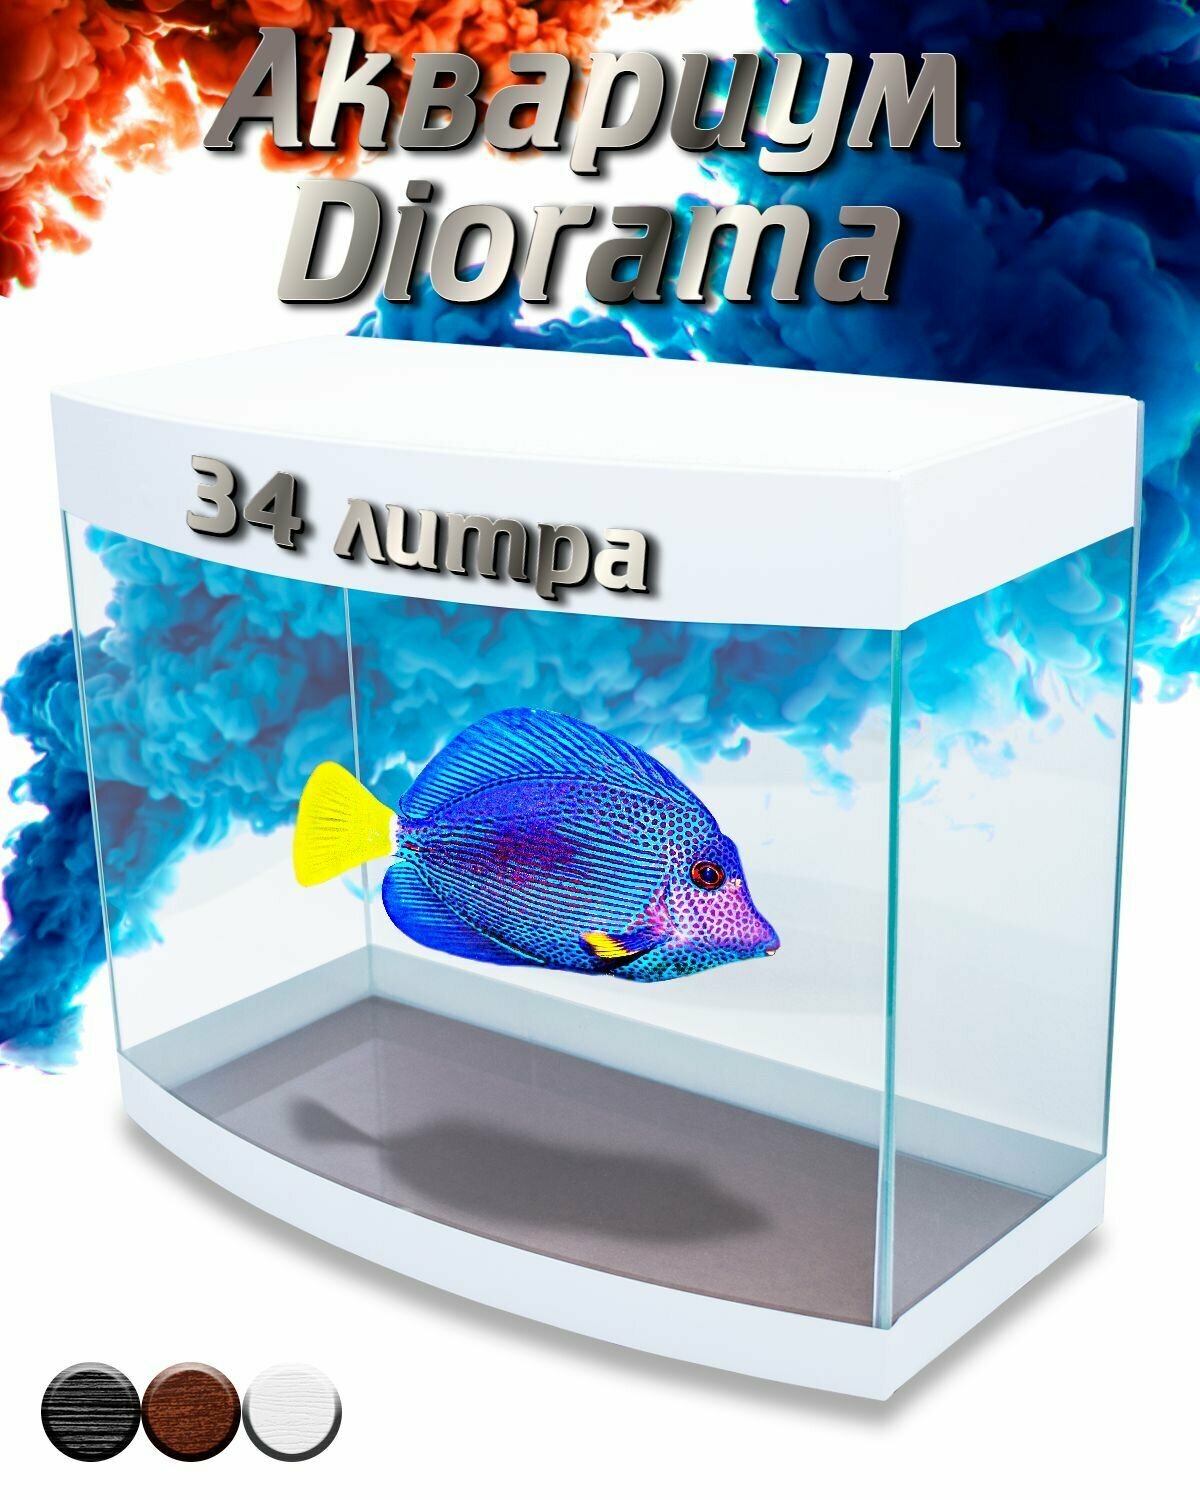 Аквариум для рыбок Diarama 34L White Edition V2.0 - фотография № 1